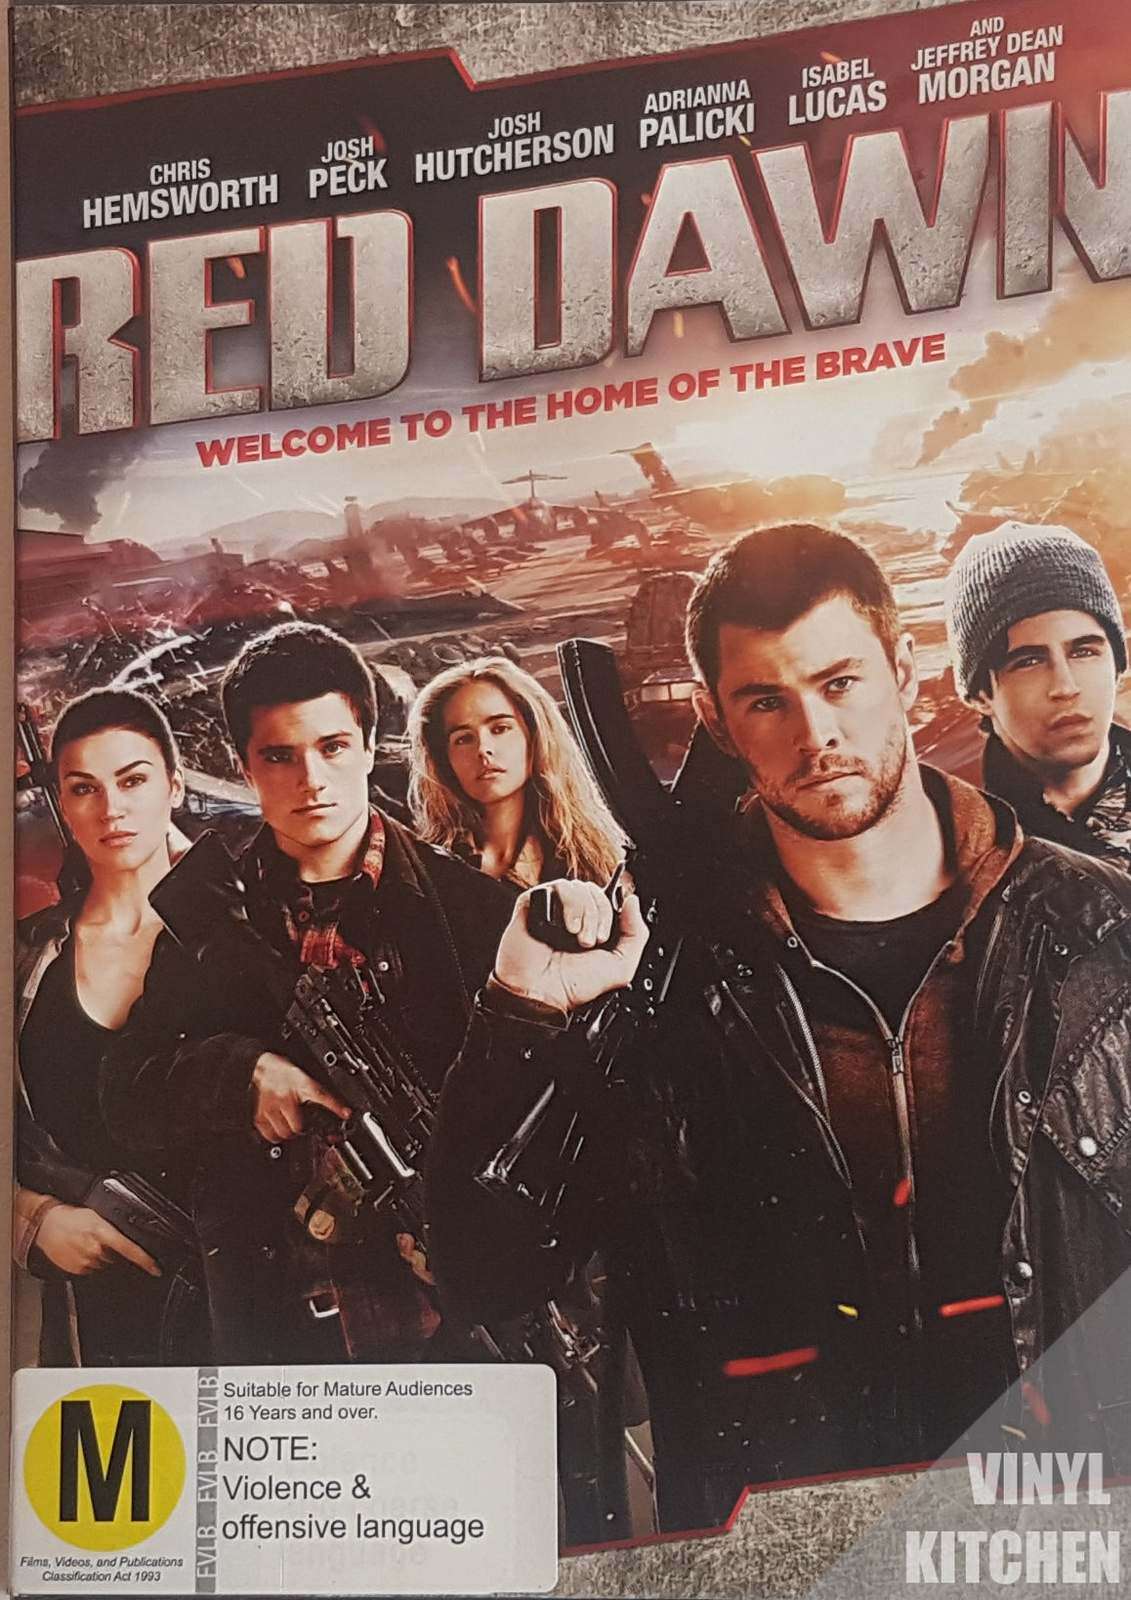 Red Dawn (2012)